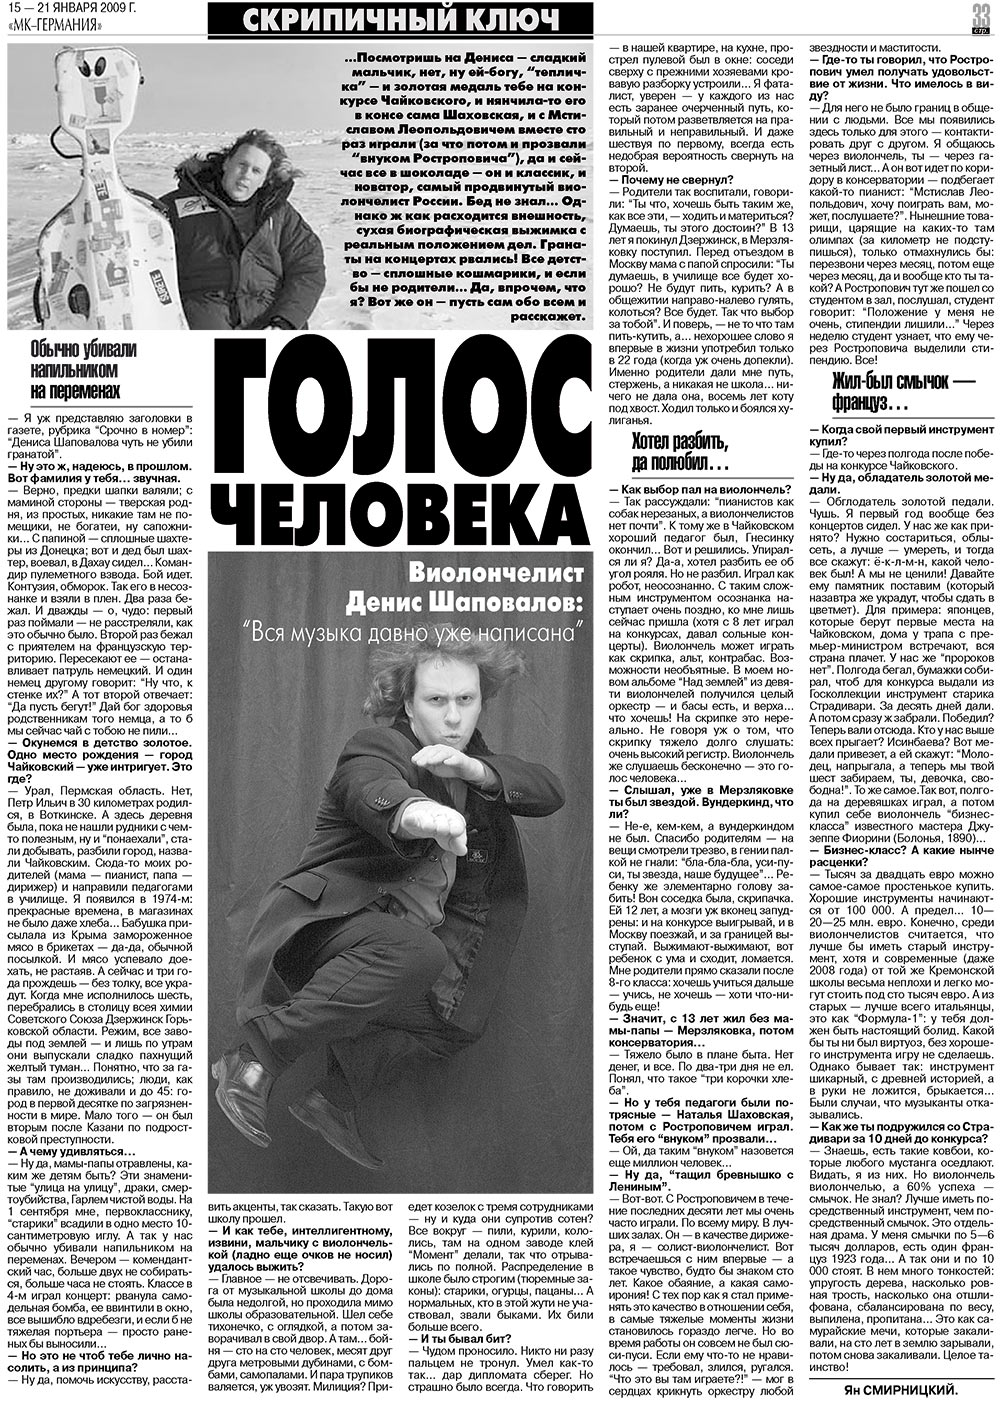 МК-Германия, газета. 2009 №3 стр.33